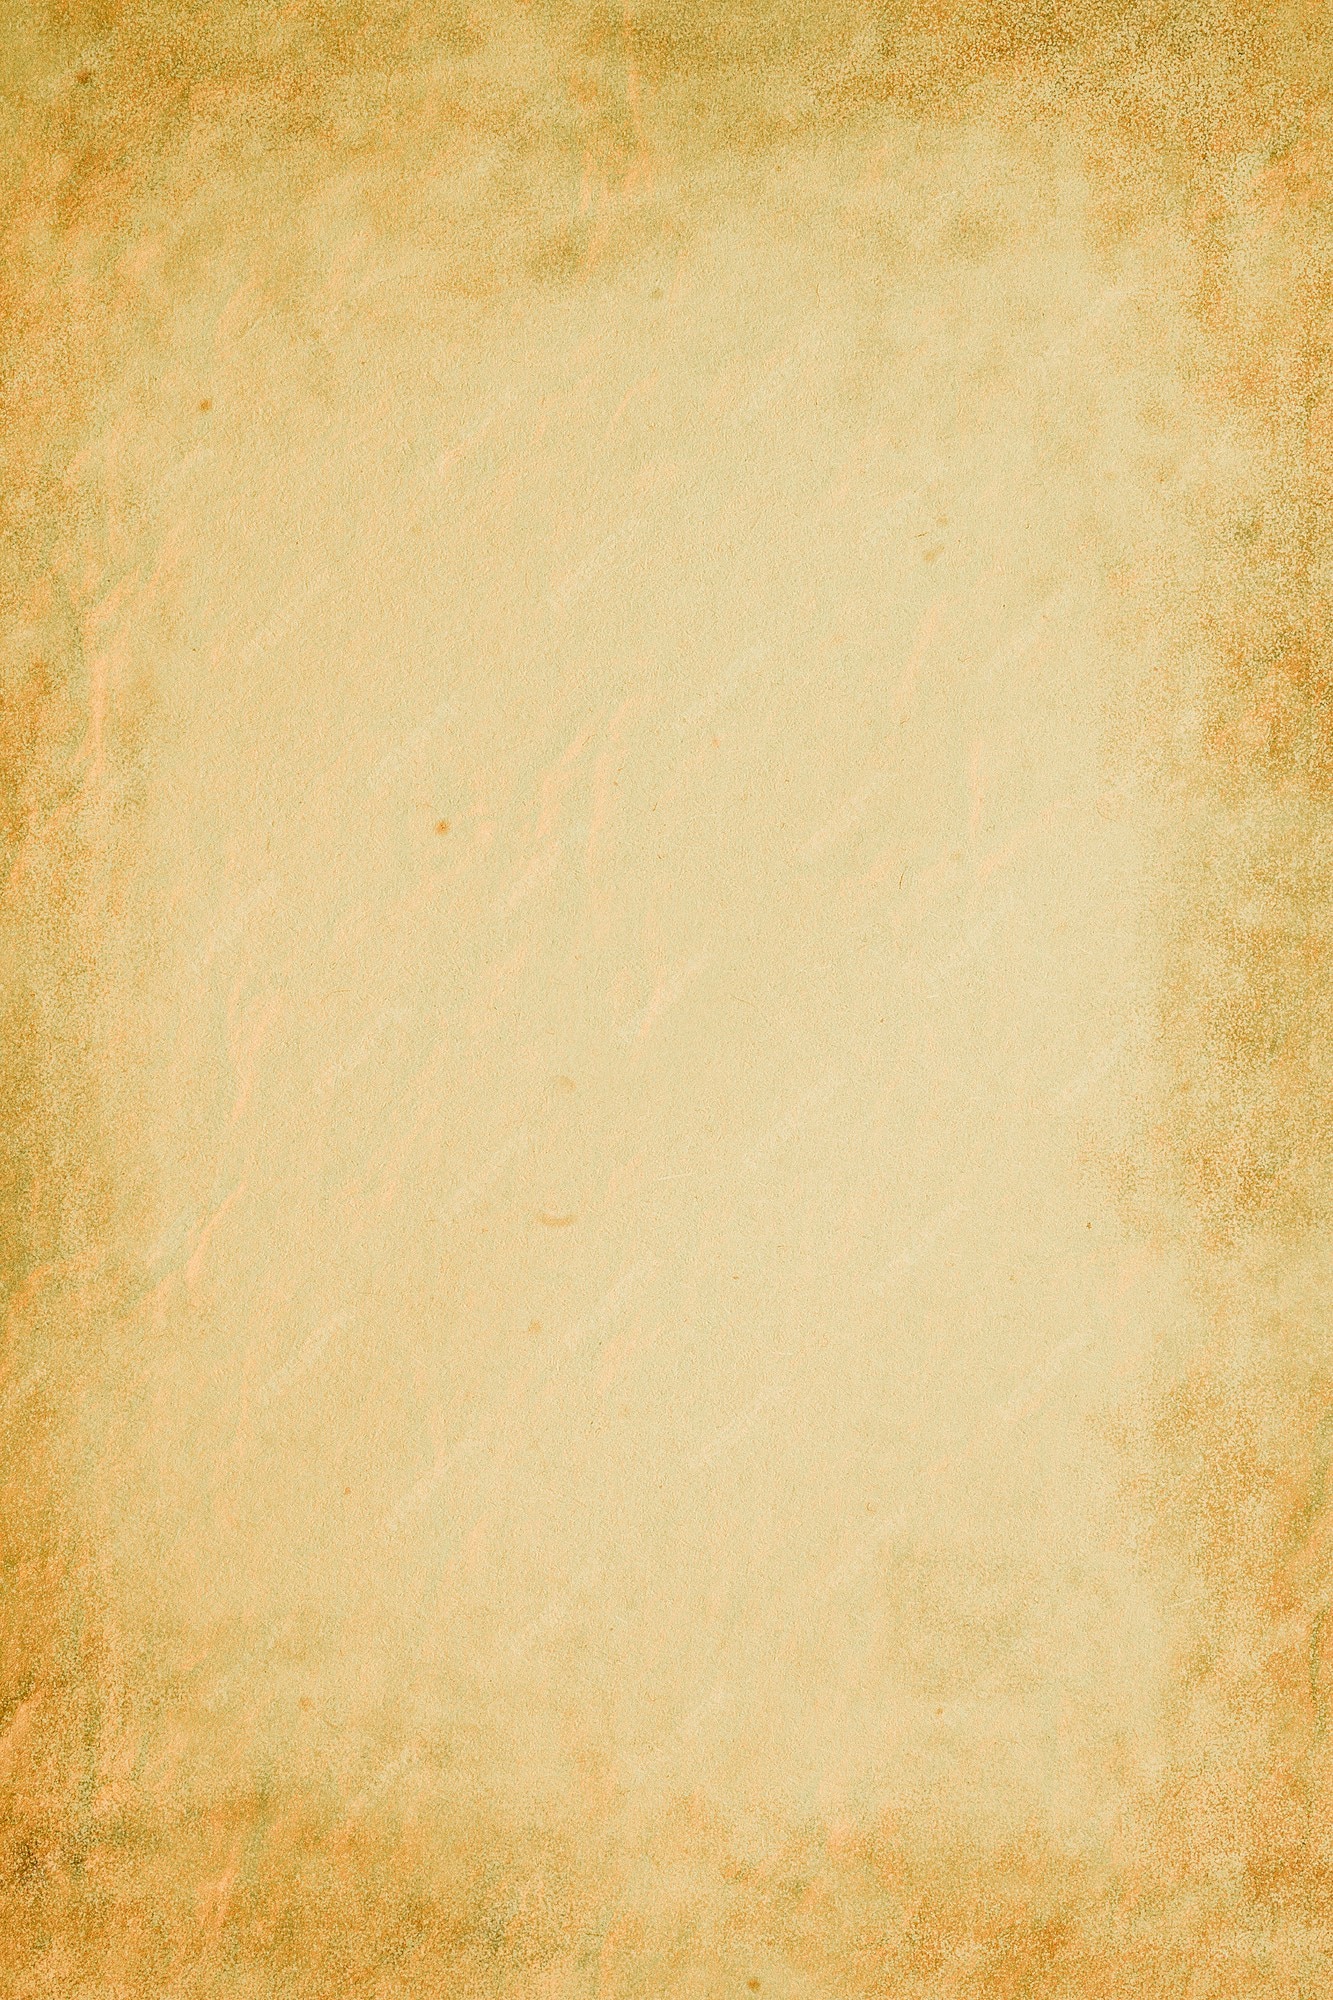 鍔 Nube Credencial Textura de papel. fondos de página de libro antiguo | Foto Premium